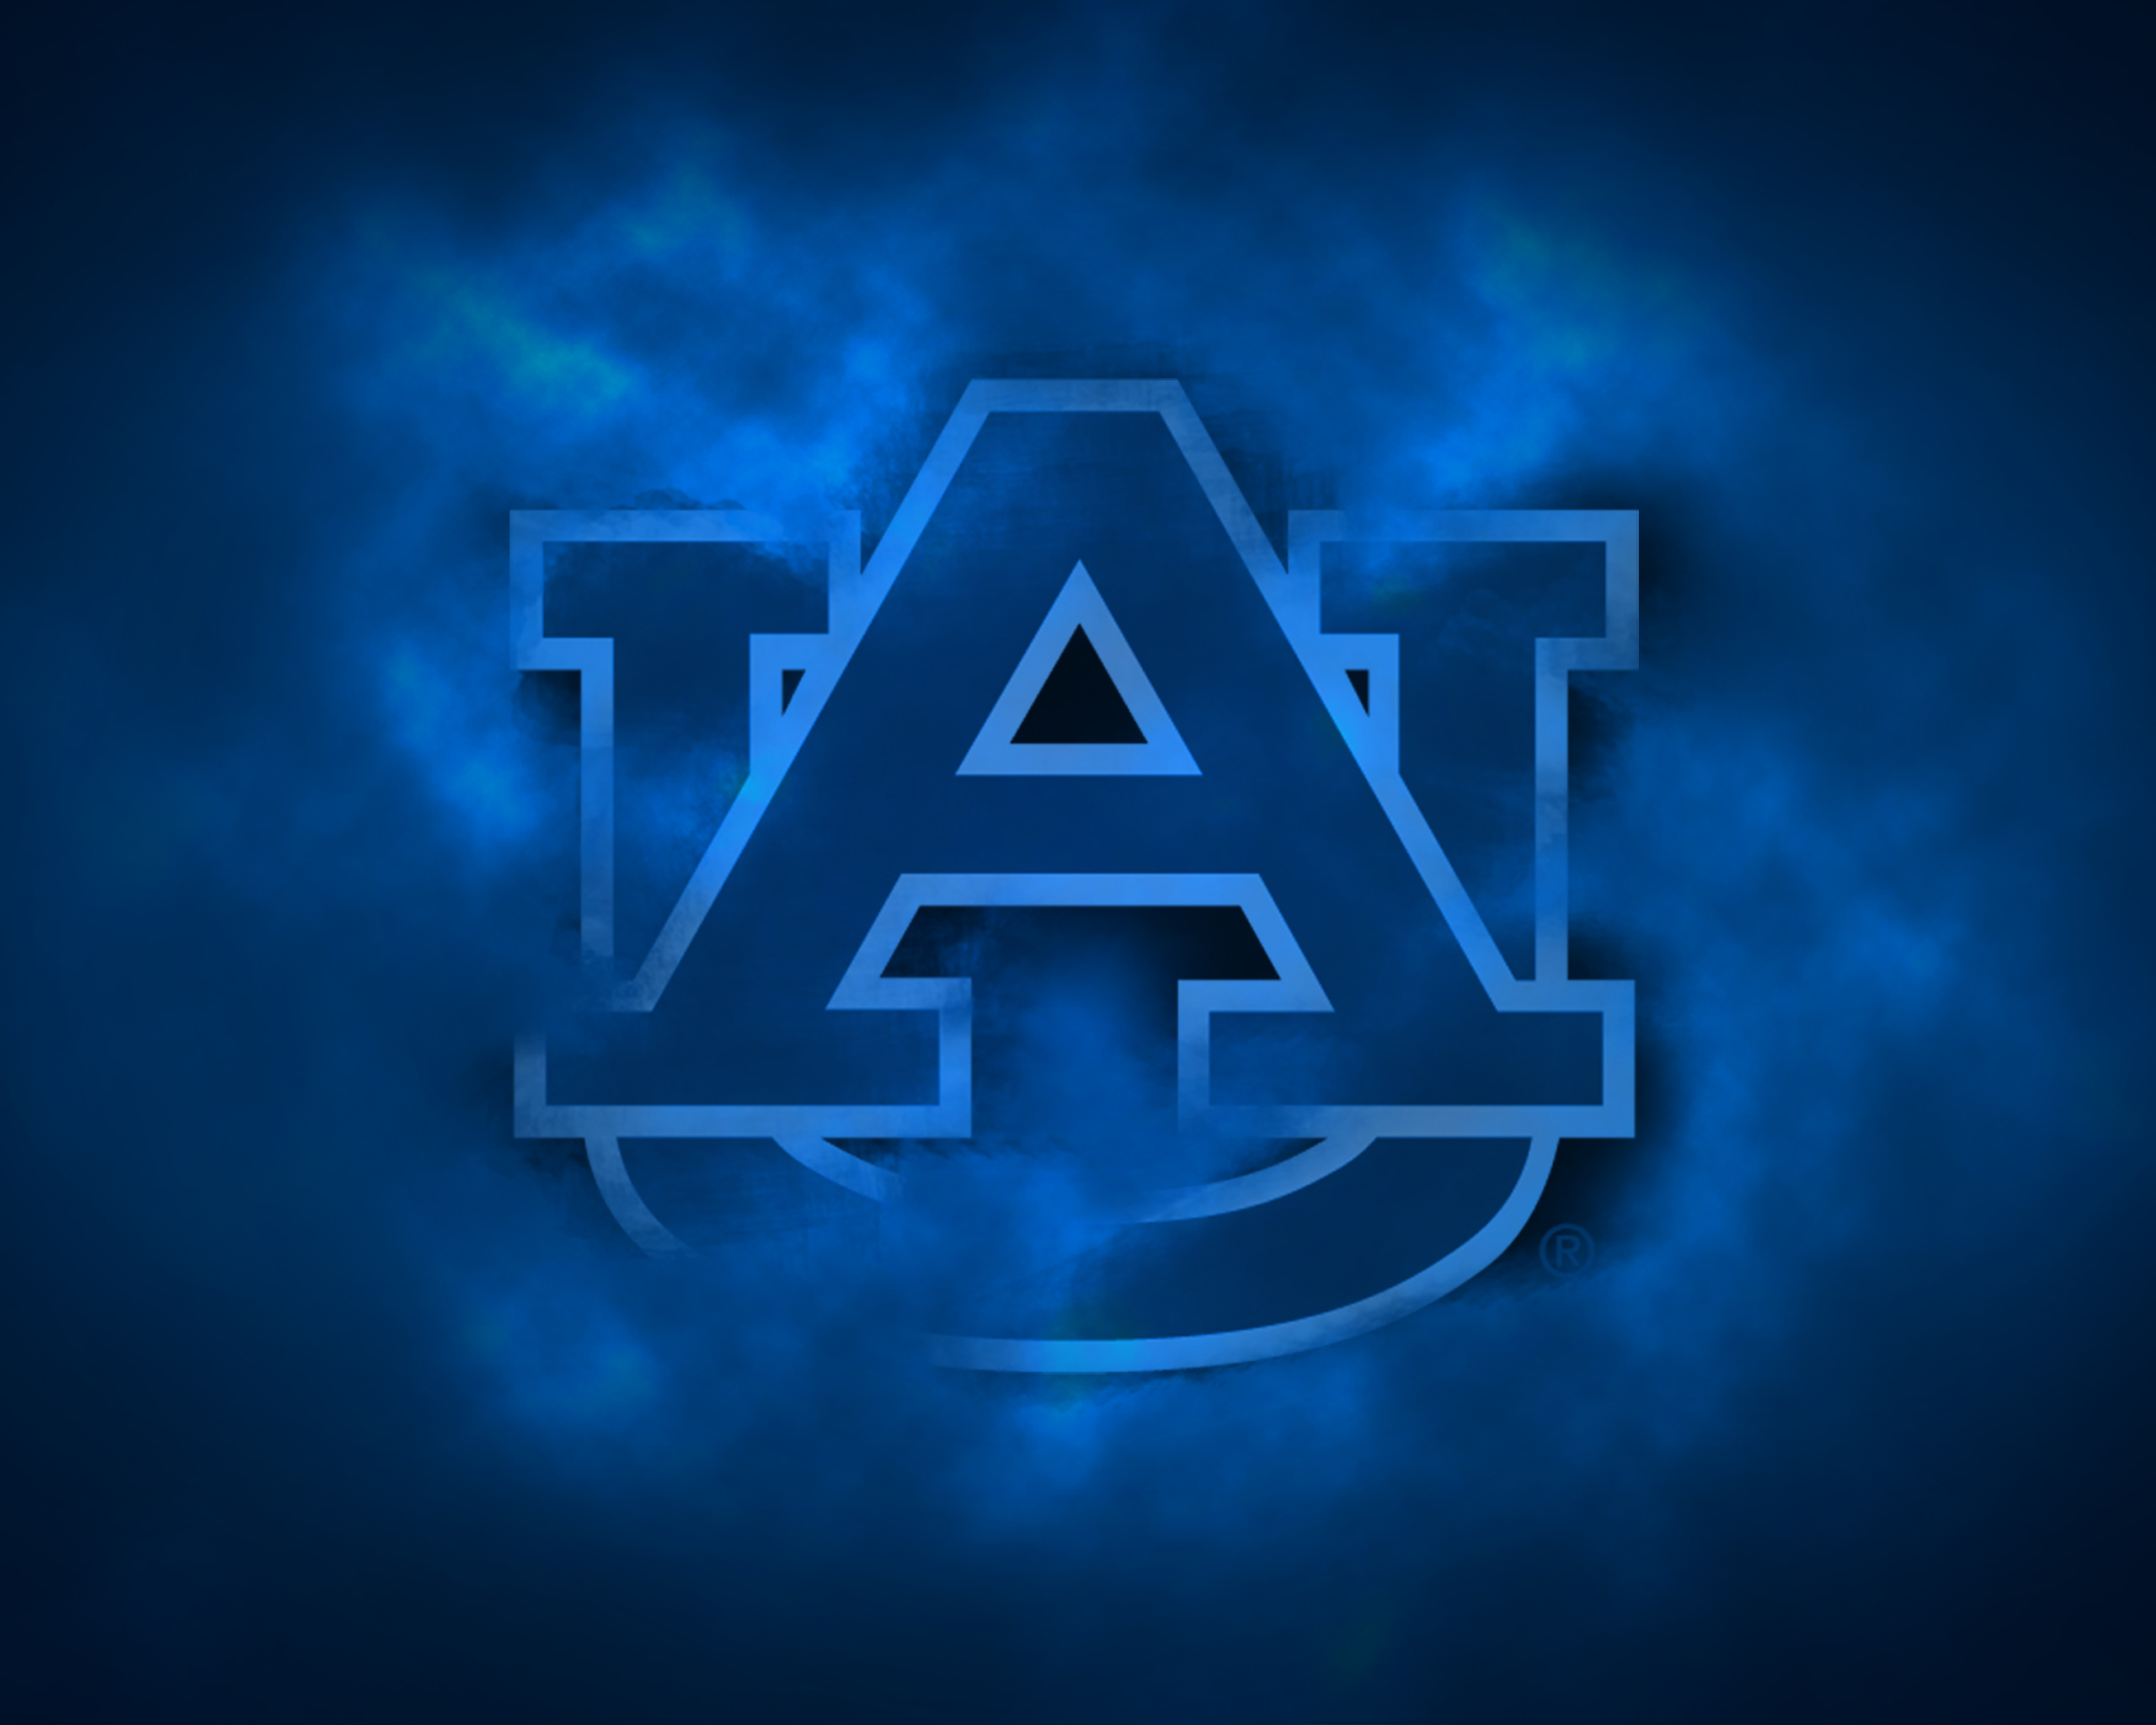 Auburn Tigers Football Logo